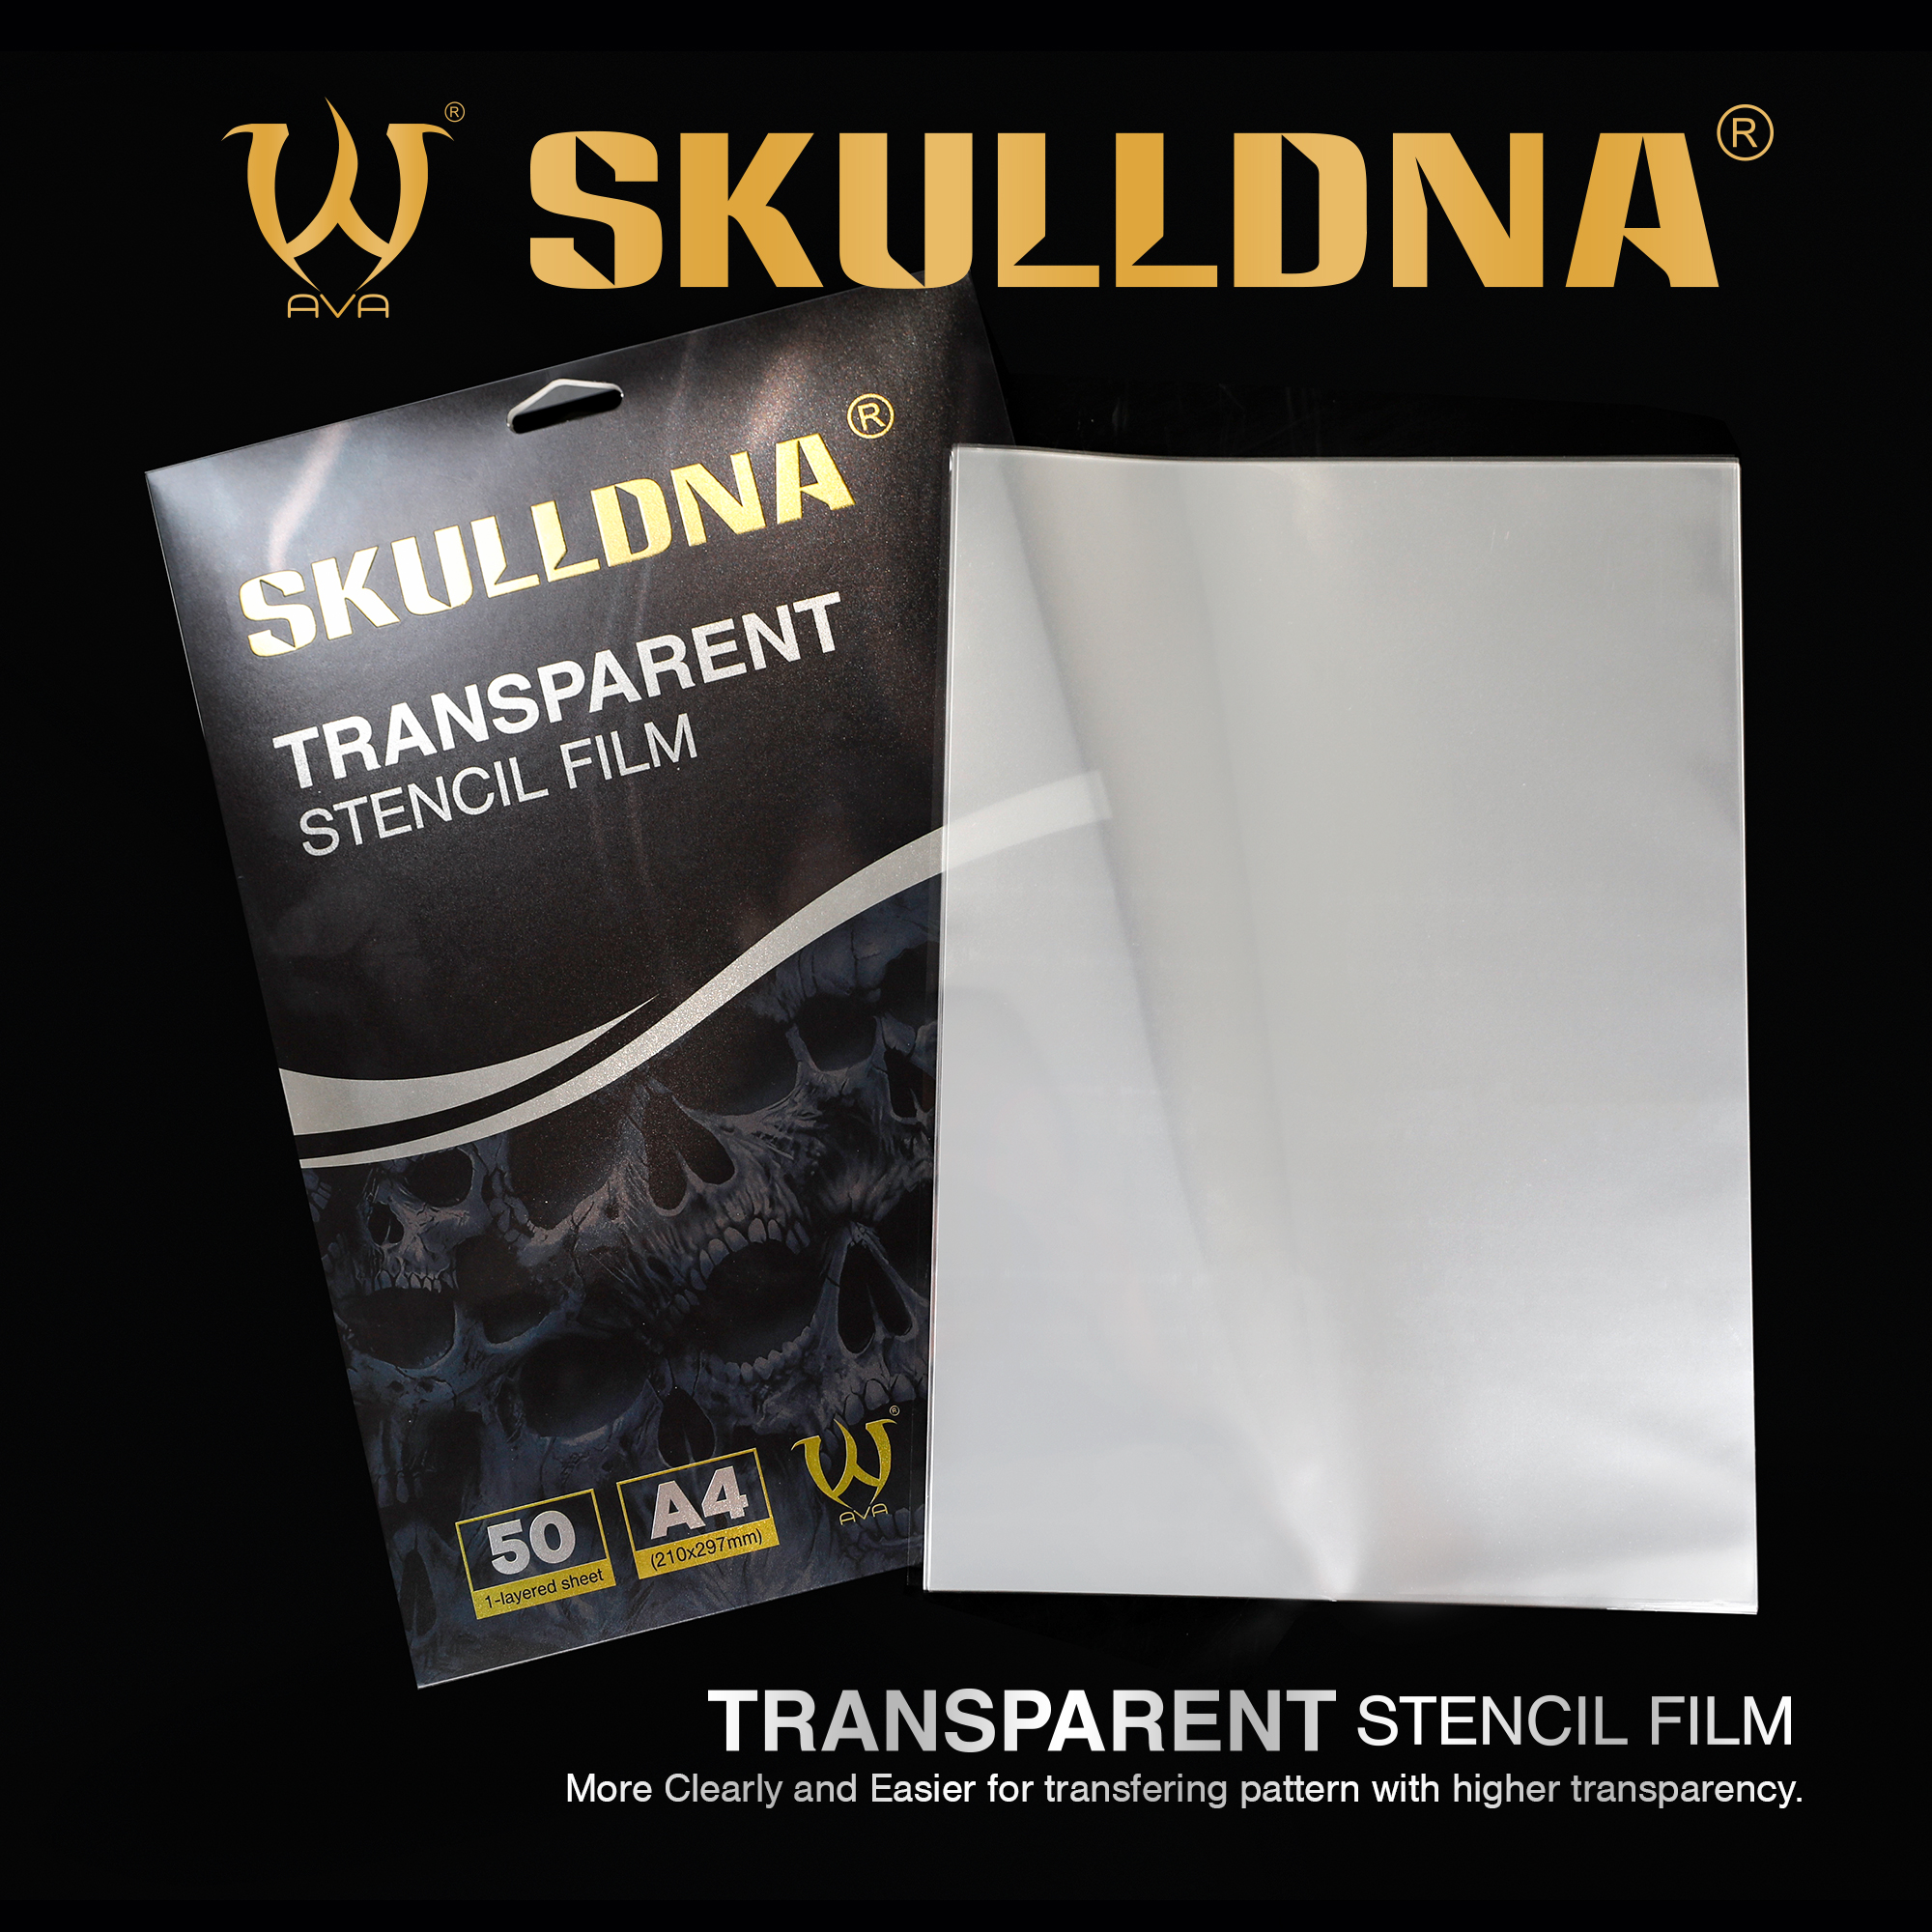 SKULLDNA Transparent Stencil Film